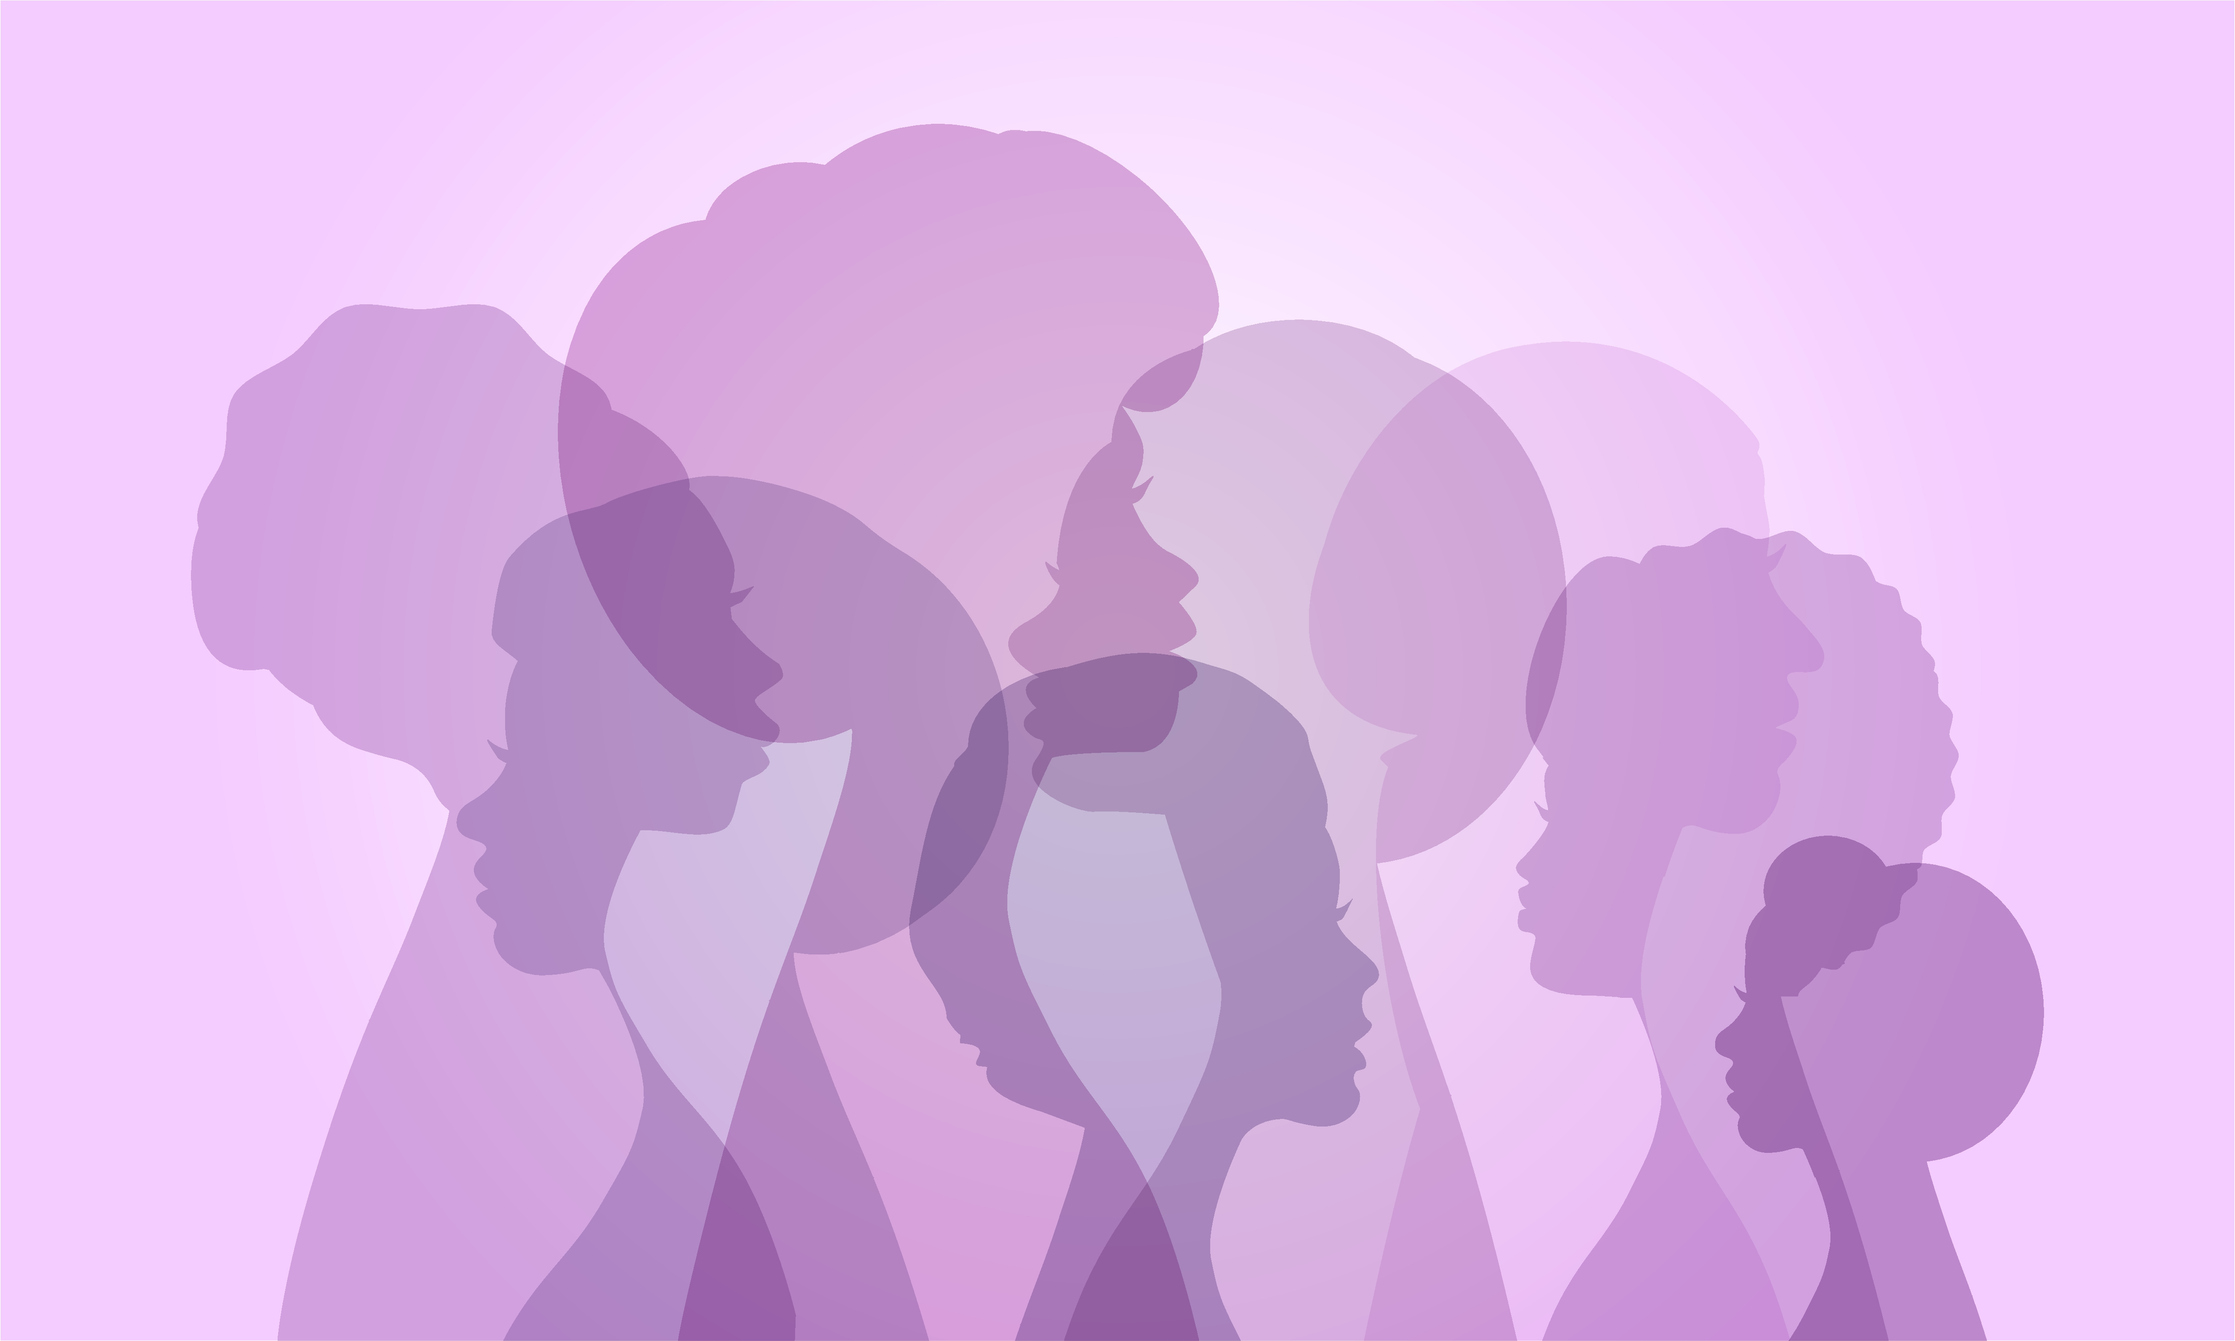 An illustration of multiple women